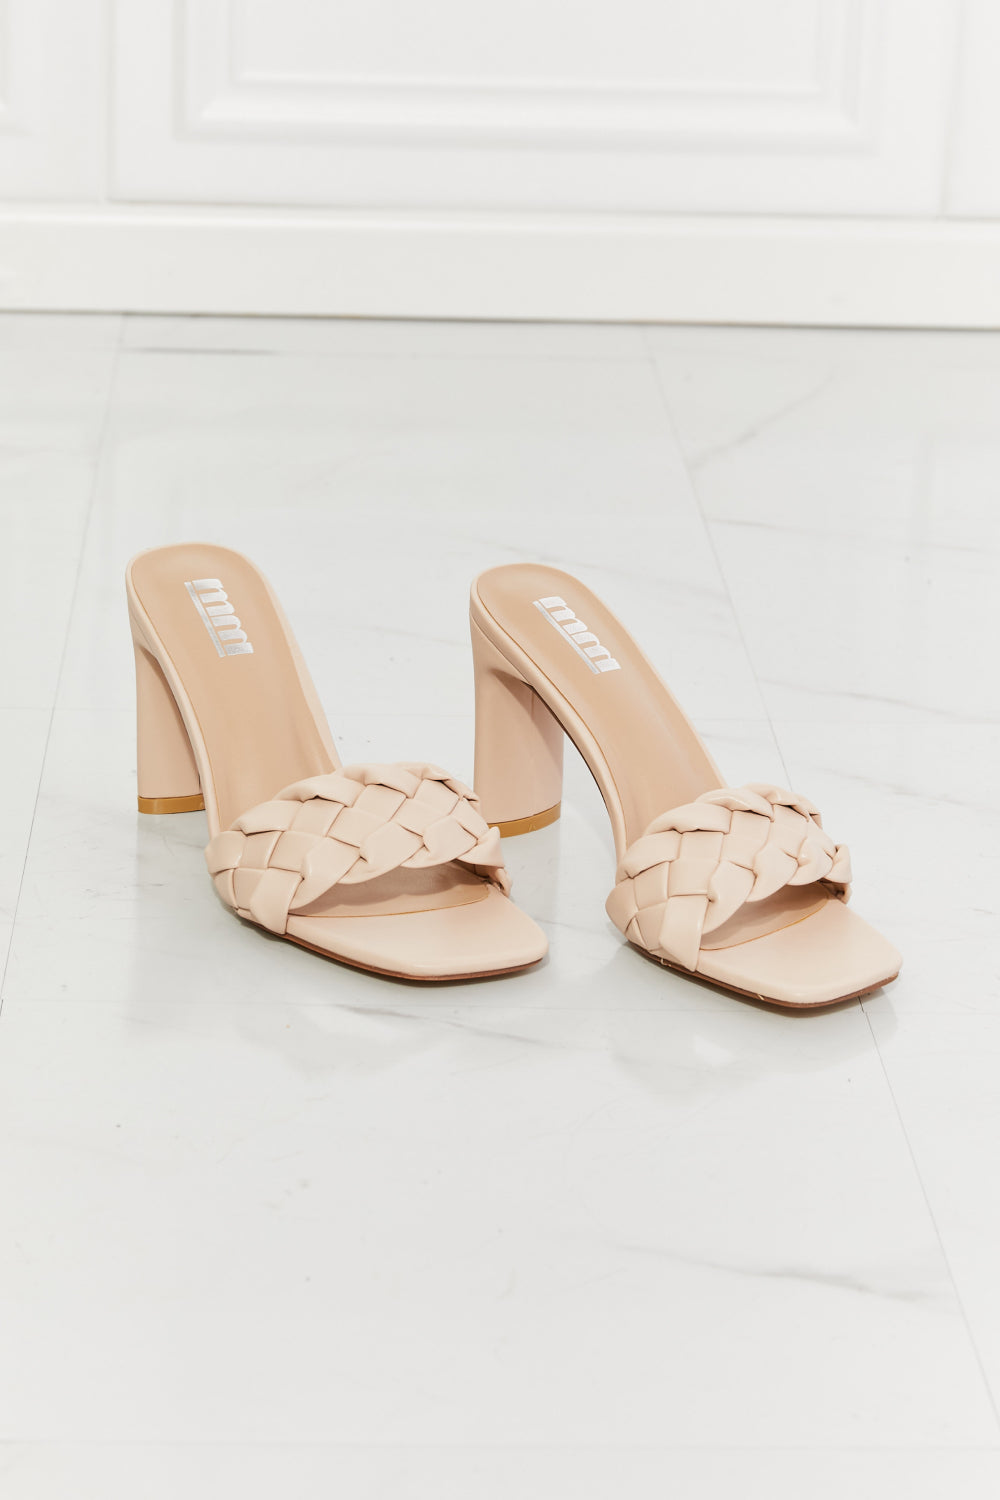 Lucky Brand Lisza Peep-toe Block Heels 6.5 Beige | eBay